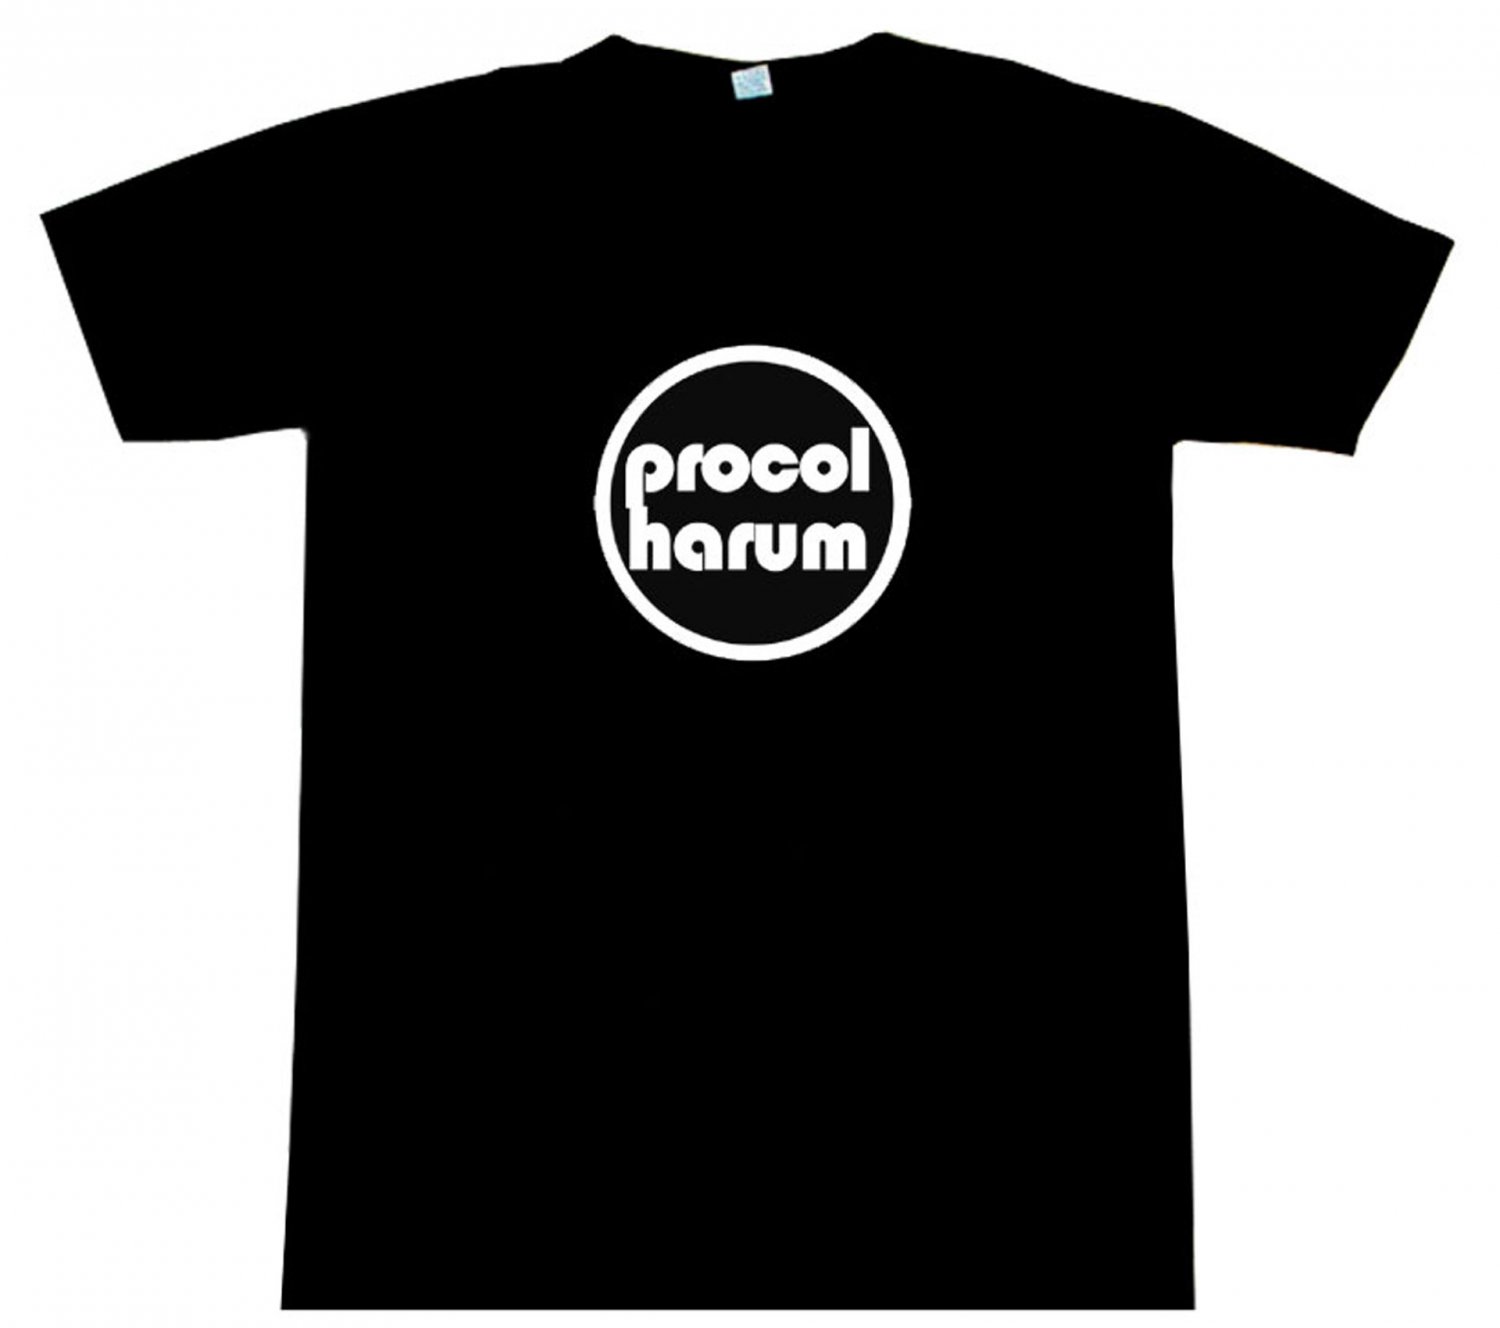 Procol Harum "O" Tee T-Shirt